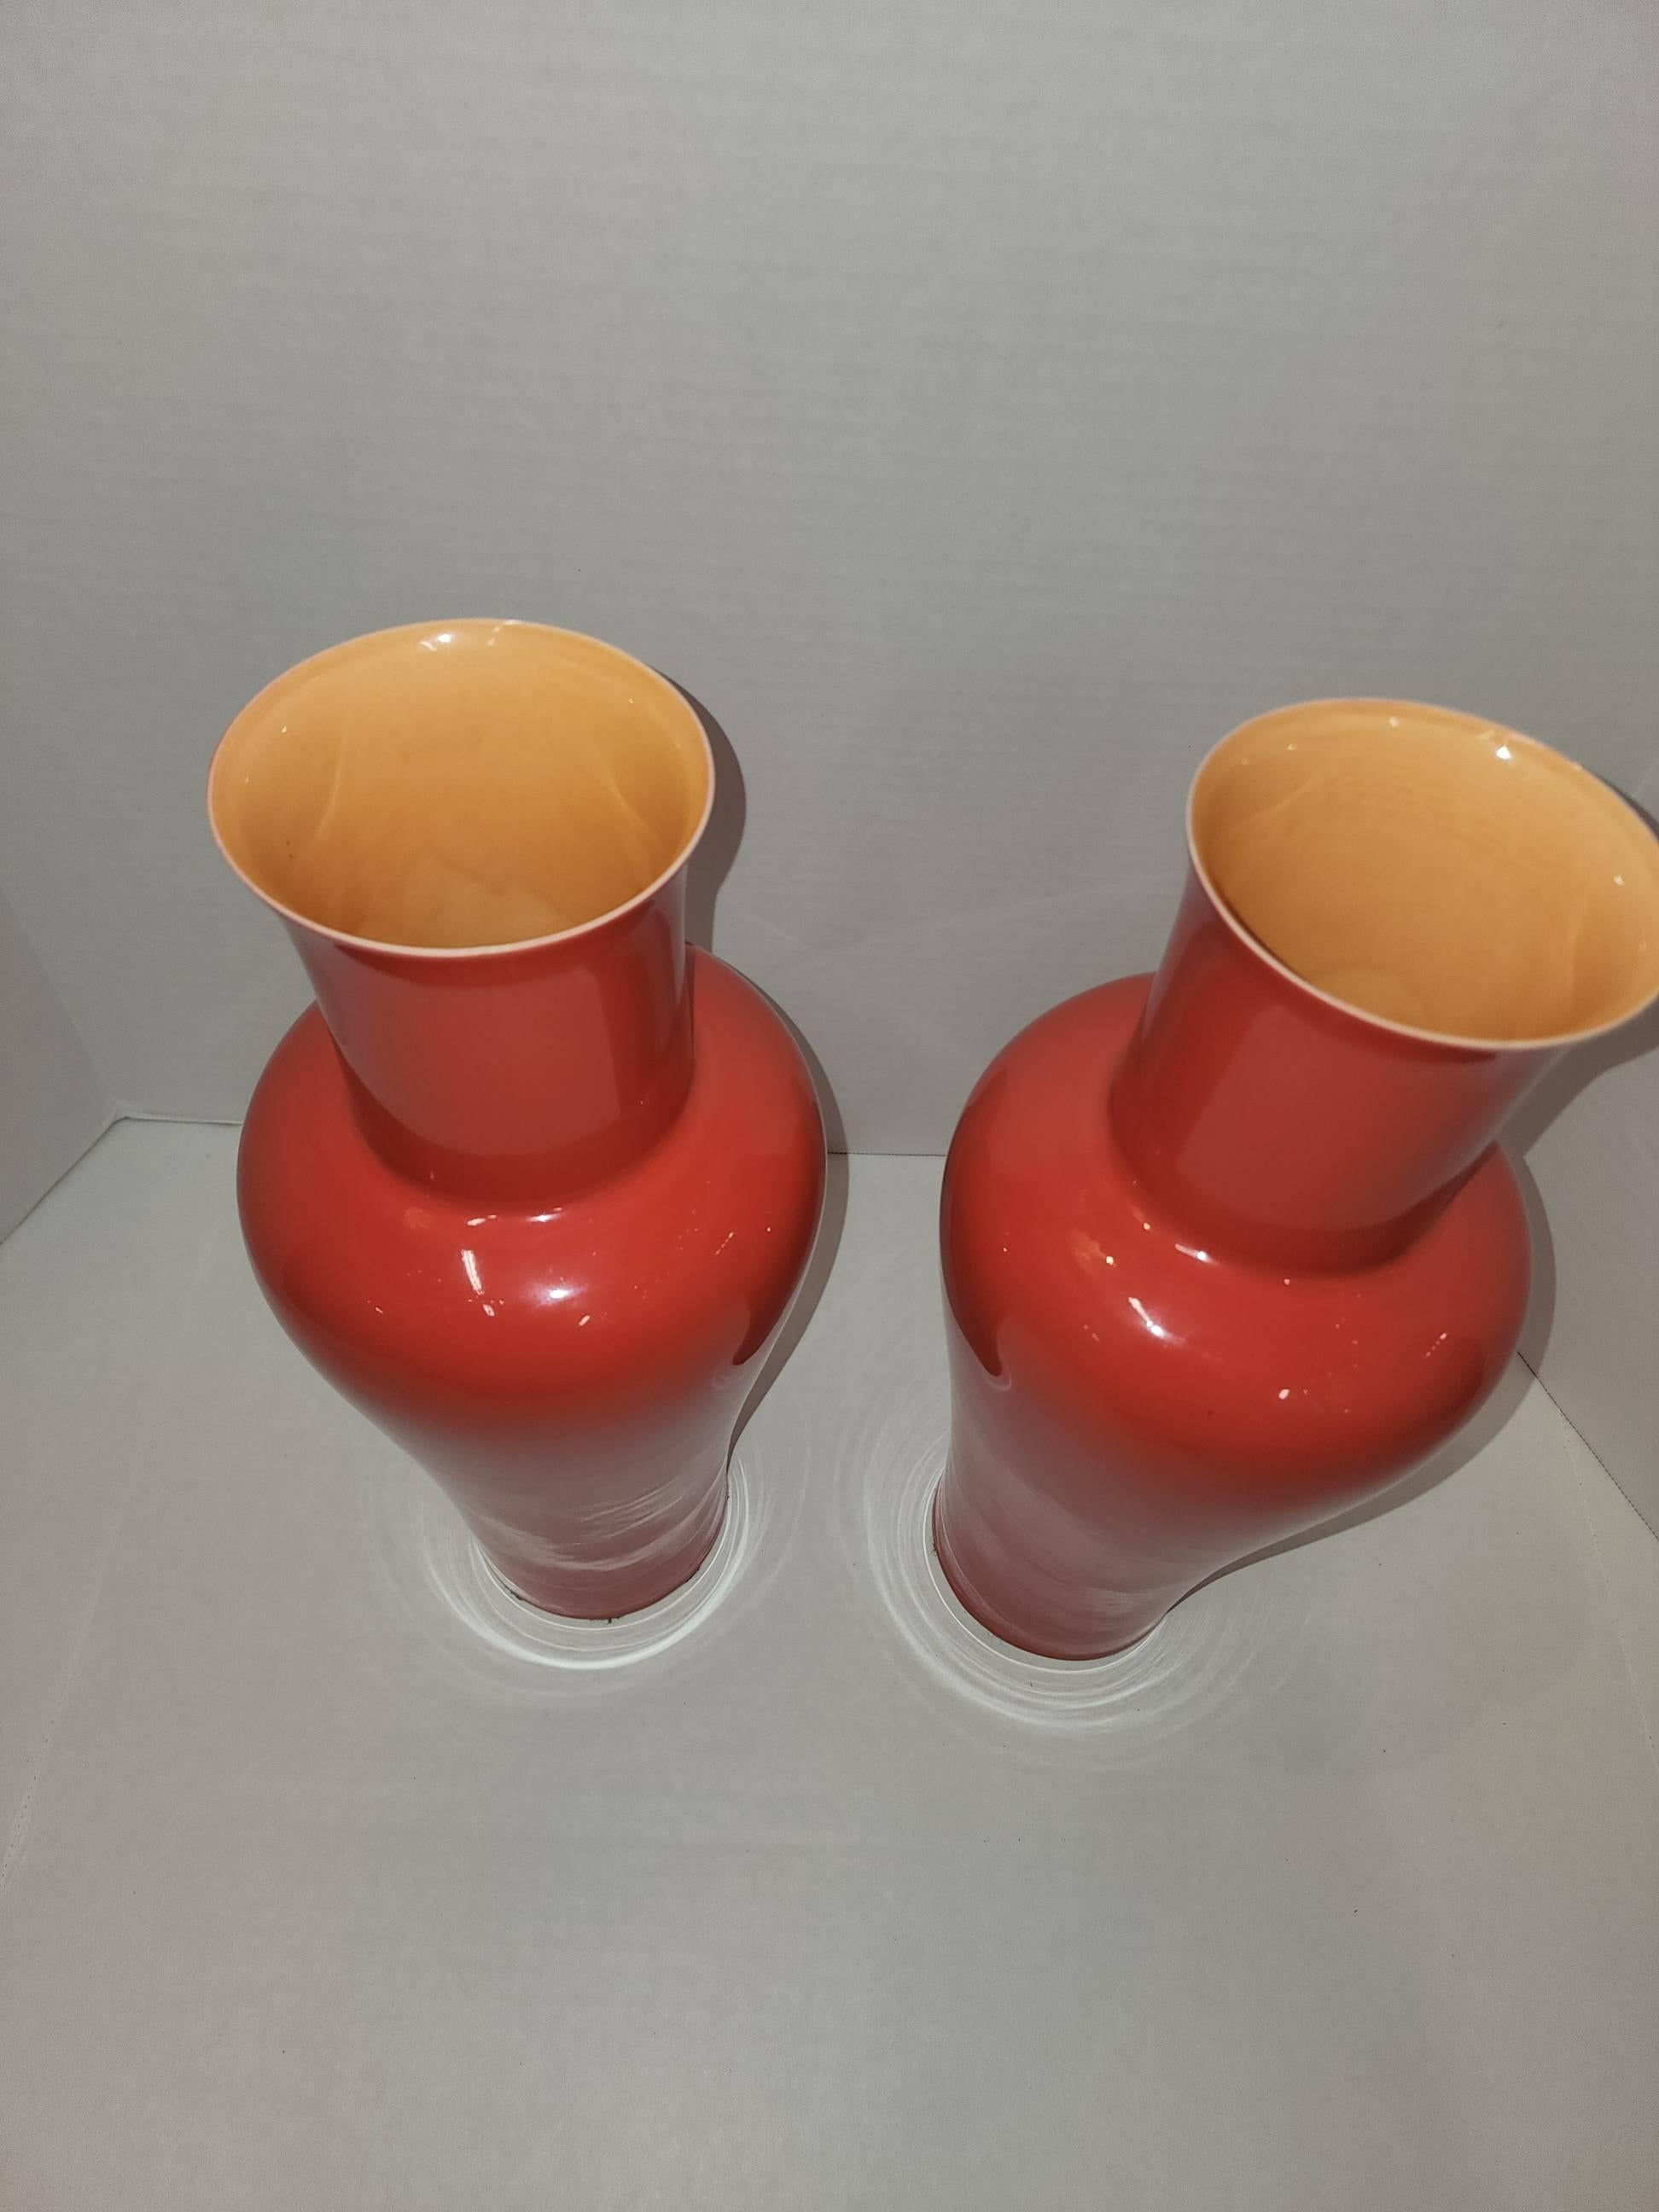 Pair of orange porcelain vase, in excellent conditions.